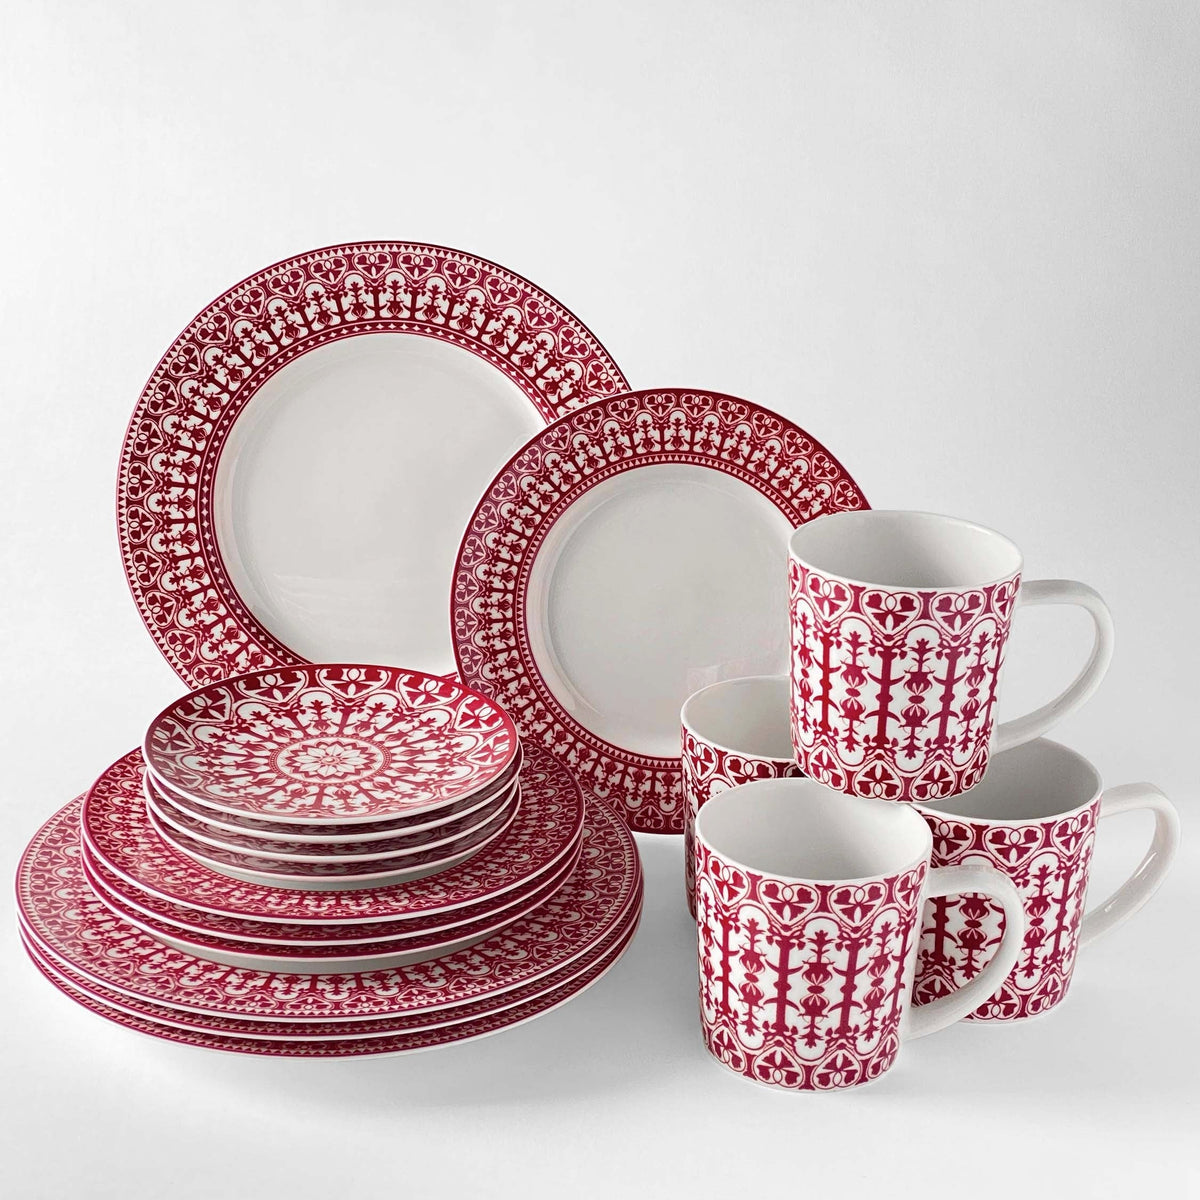 A set of Casablanca Crimson Mug dinnerware by Caskata Artisanal Home on a white surface.